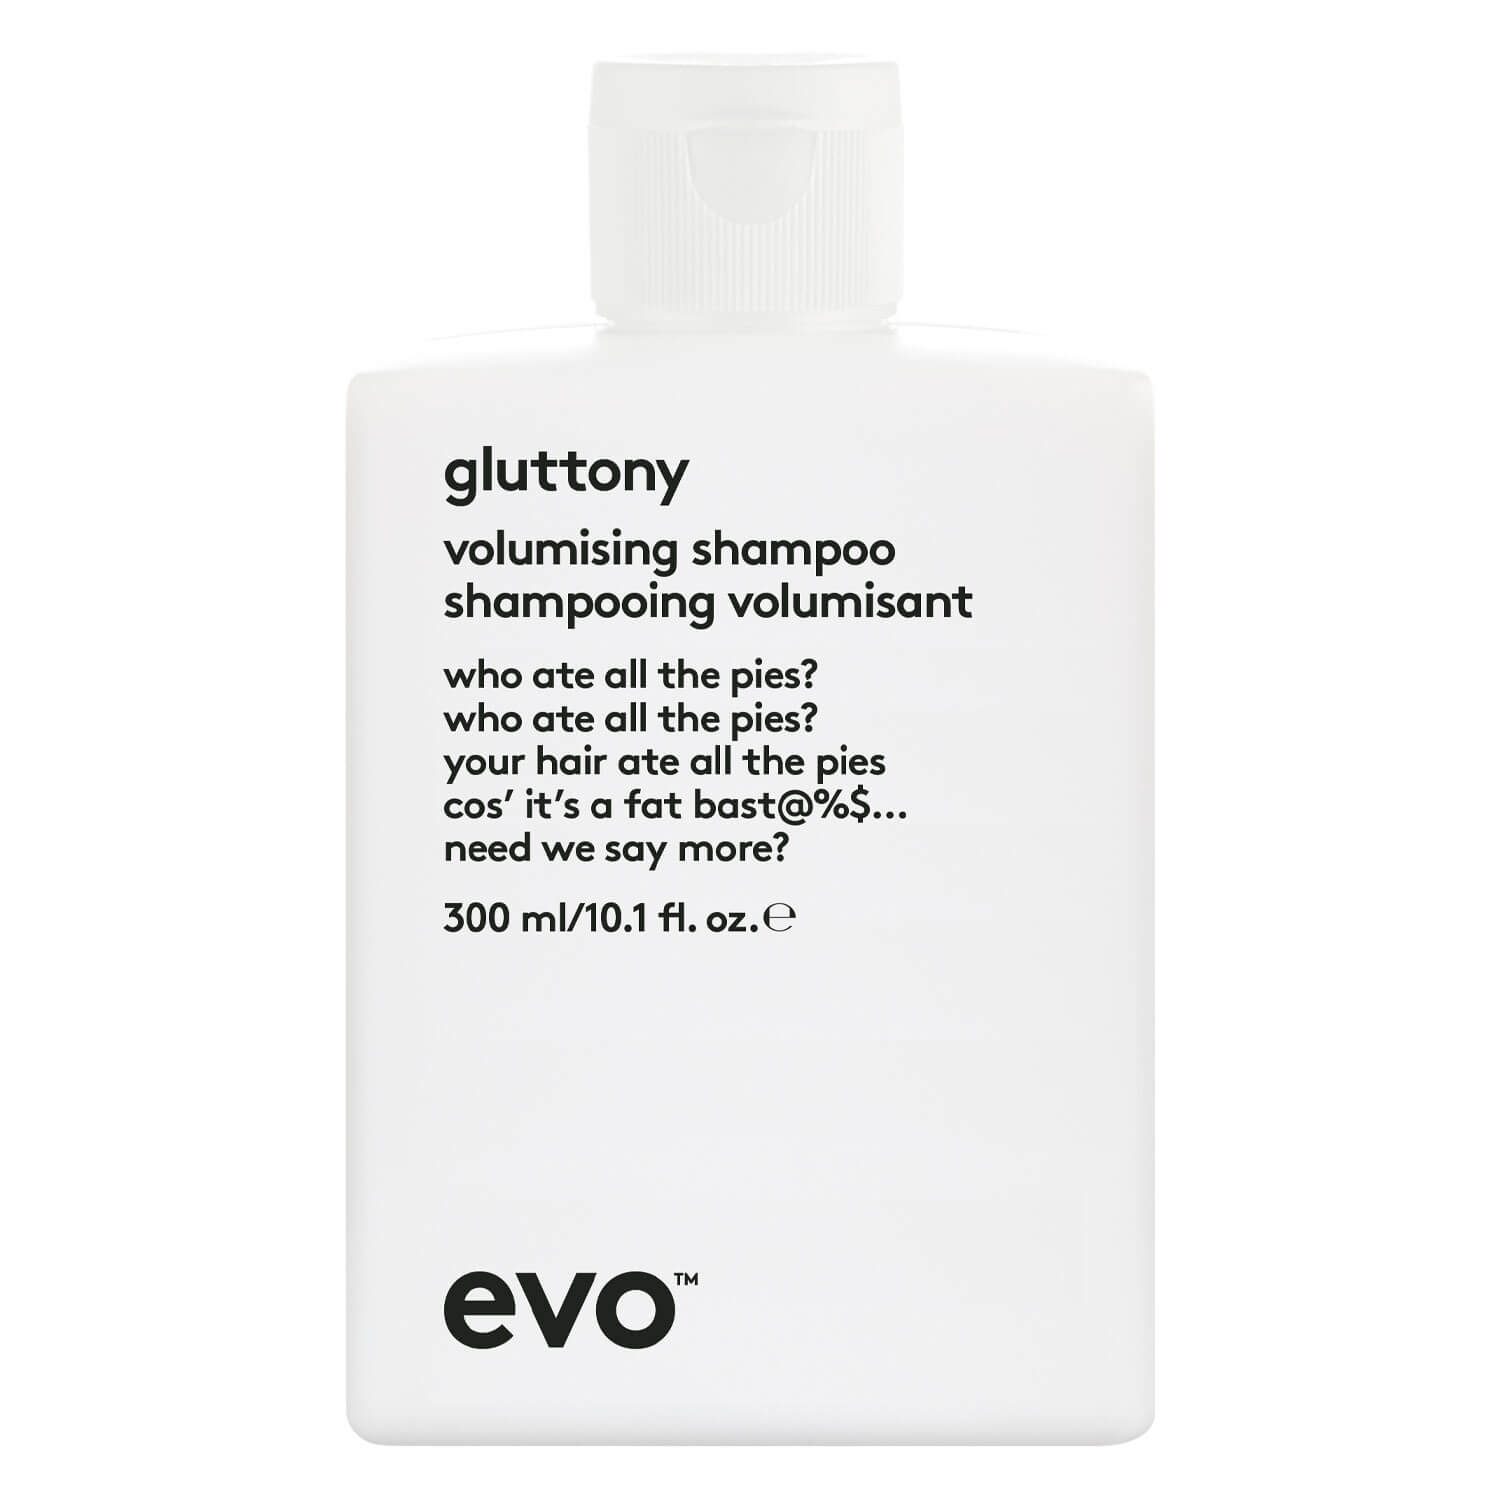 Produktbild von evo volume - gluttony volumising shampoo